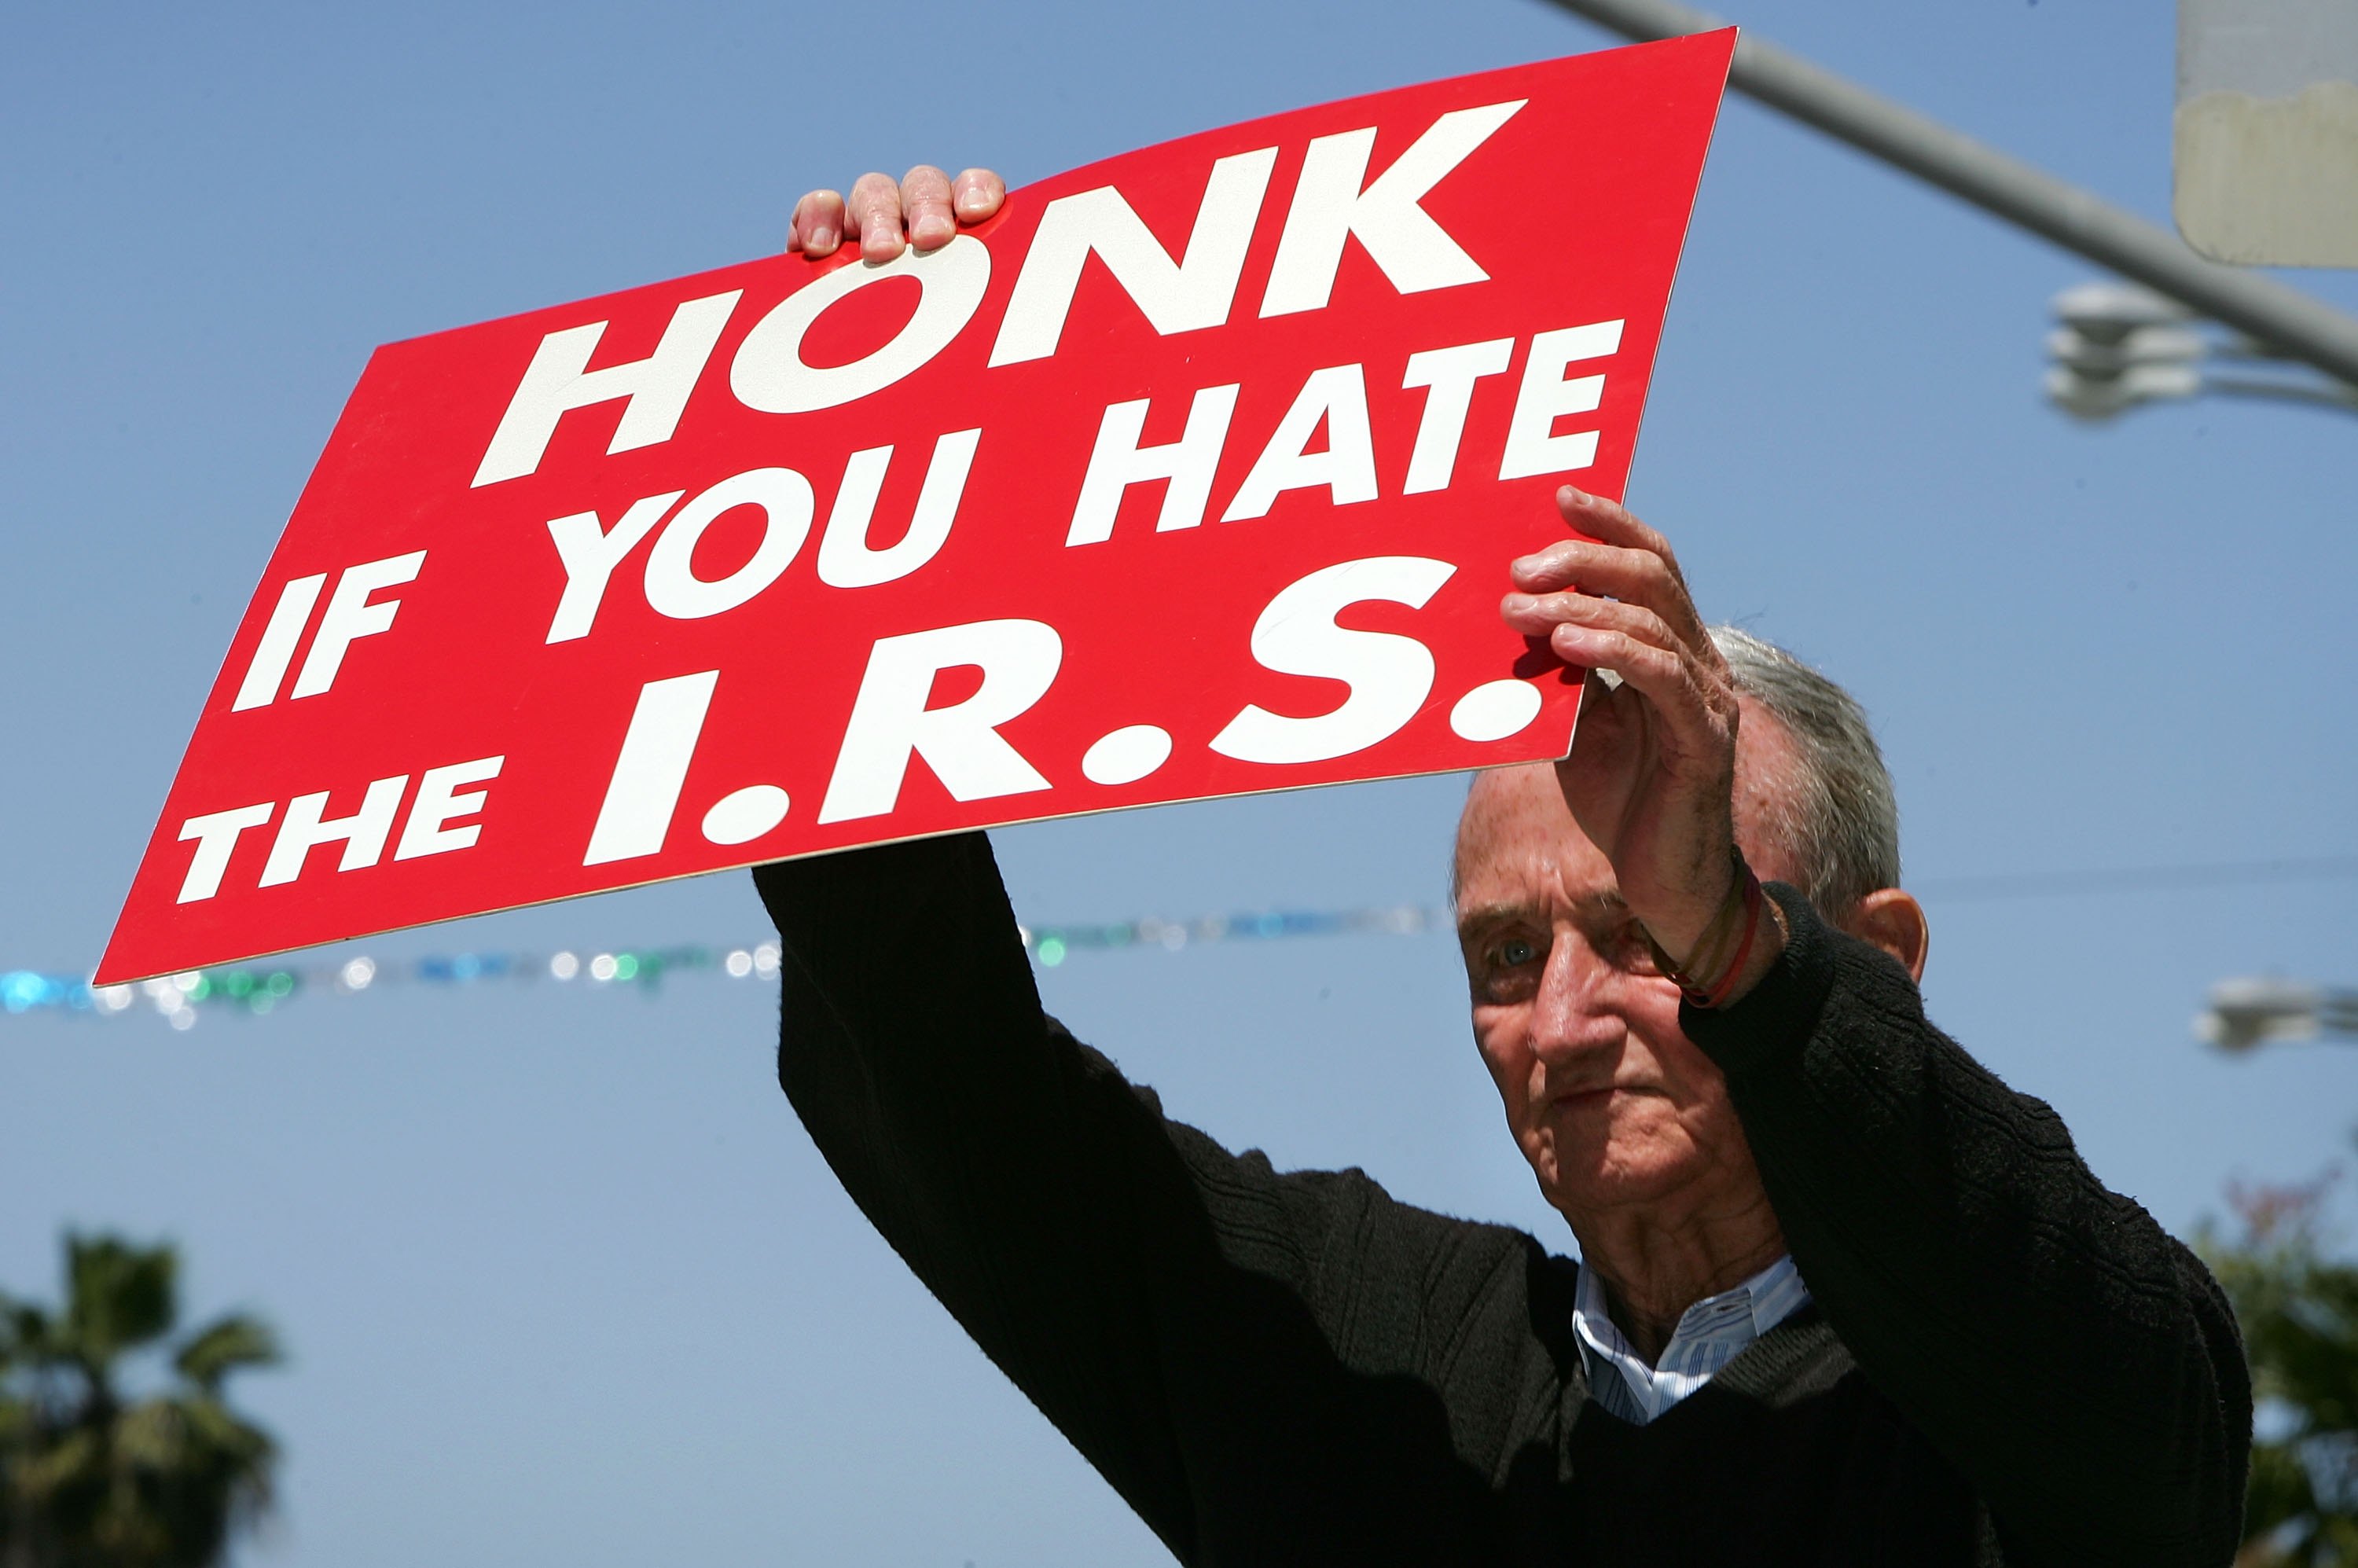 Man holding anti-IRS sign